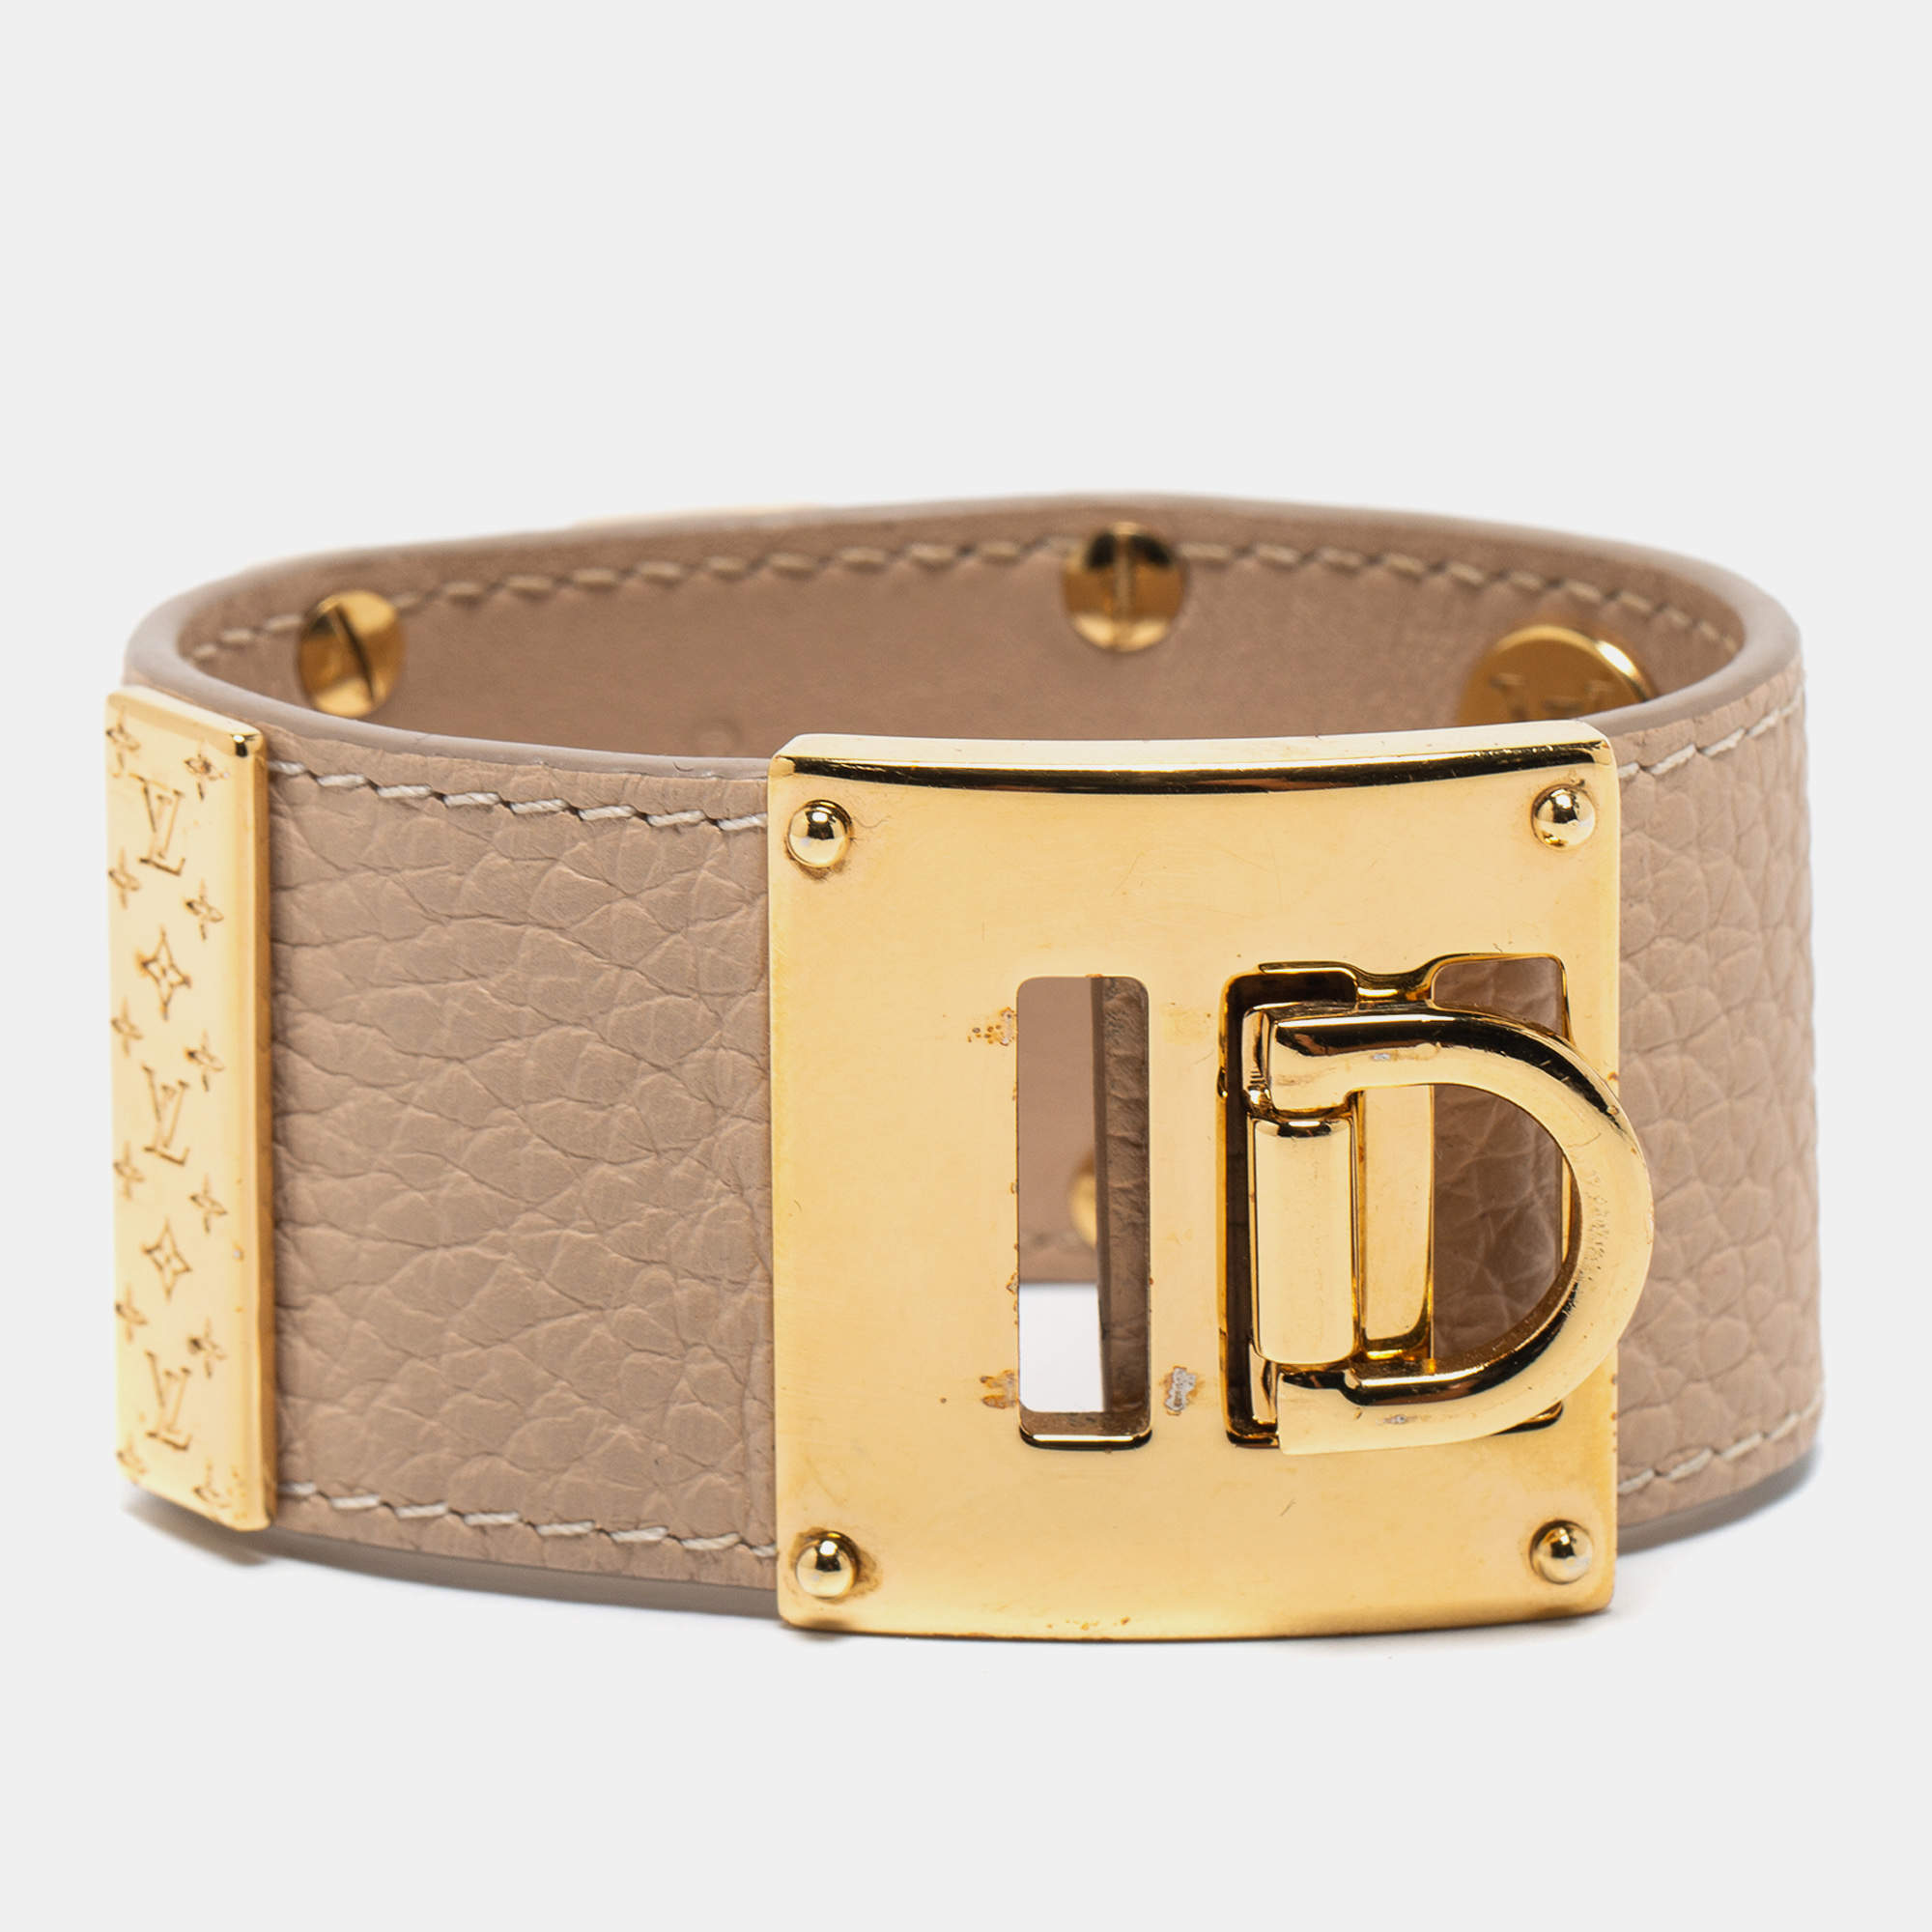 Louis Vuitton 'So LV' Cuff Bracelet